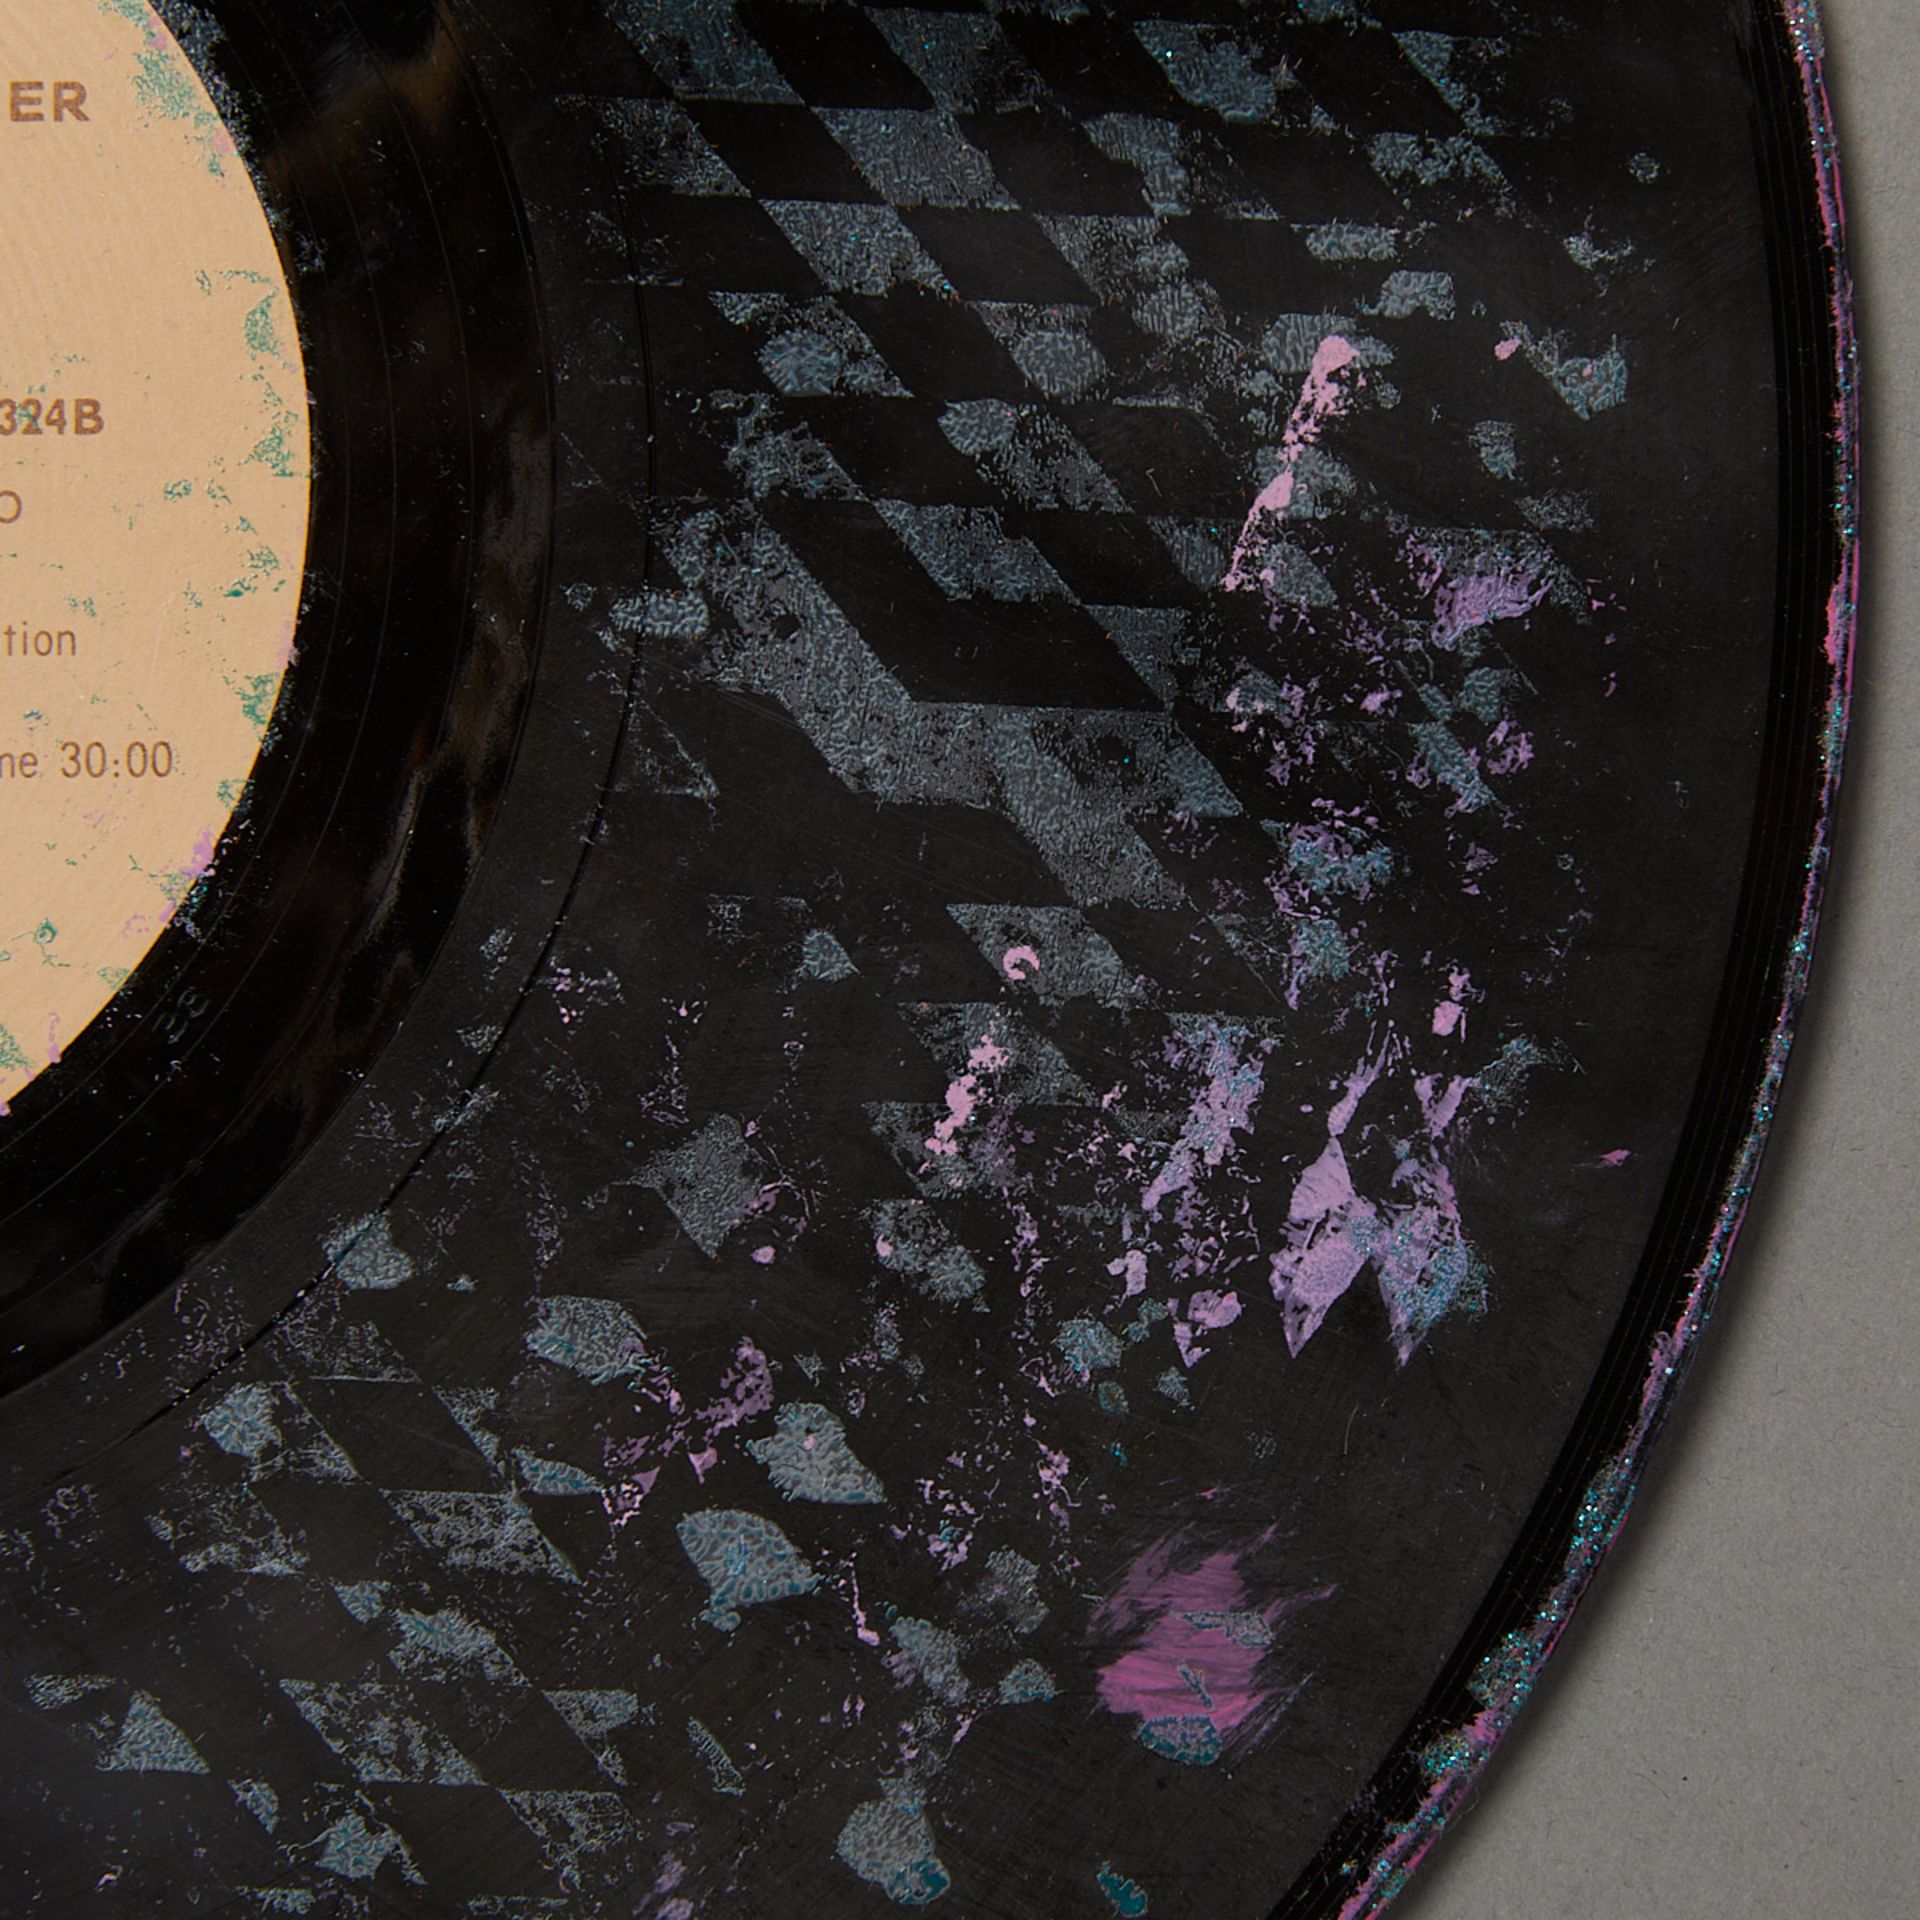 William Weege Mixed Media on Vinyl Record 1976 - Image 6 of 8